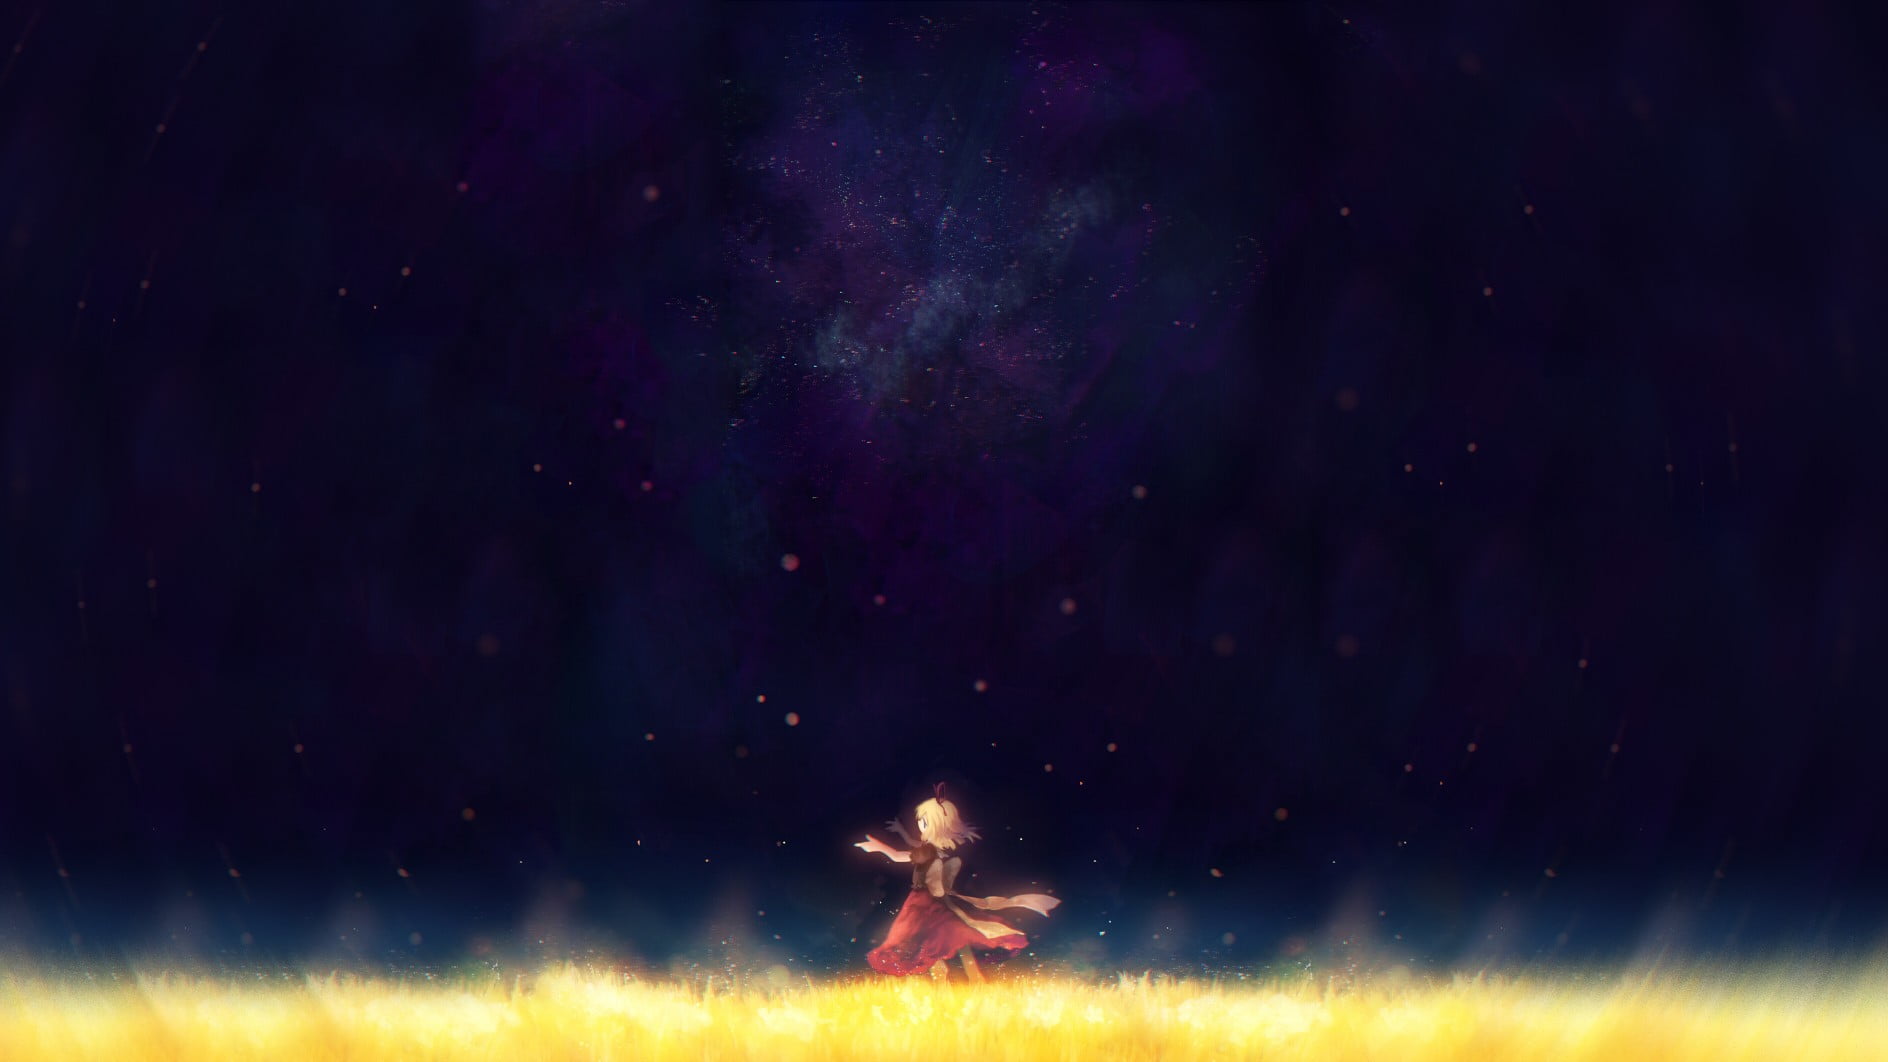 yellow haired anime, grass, stars, dress, star - space, night